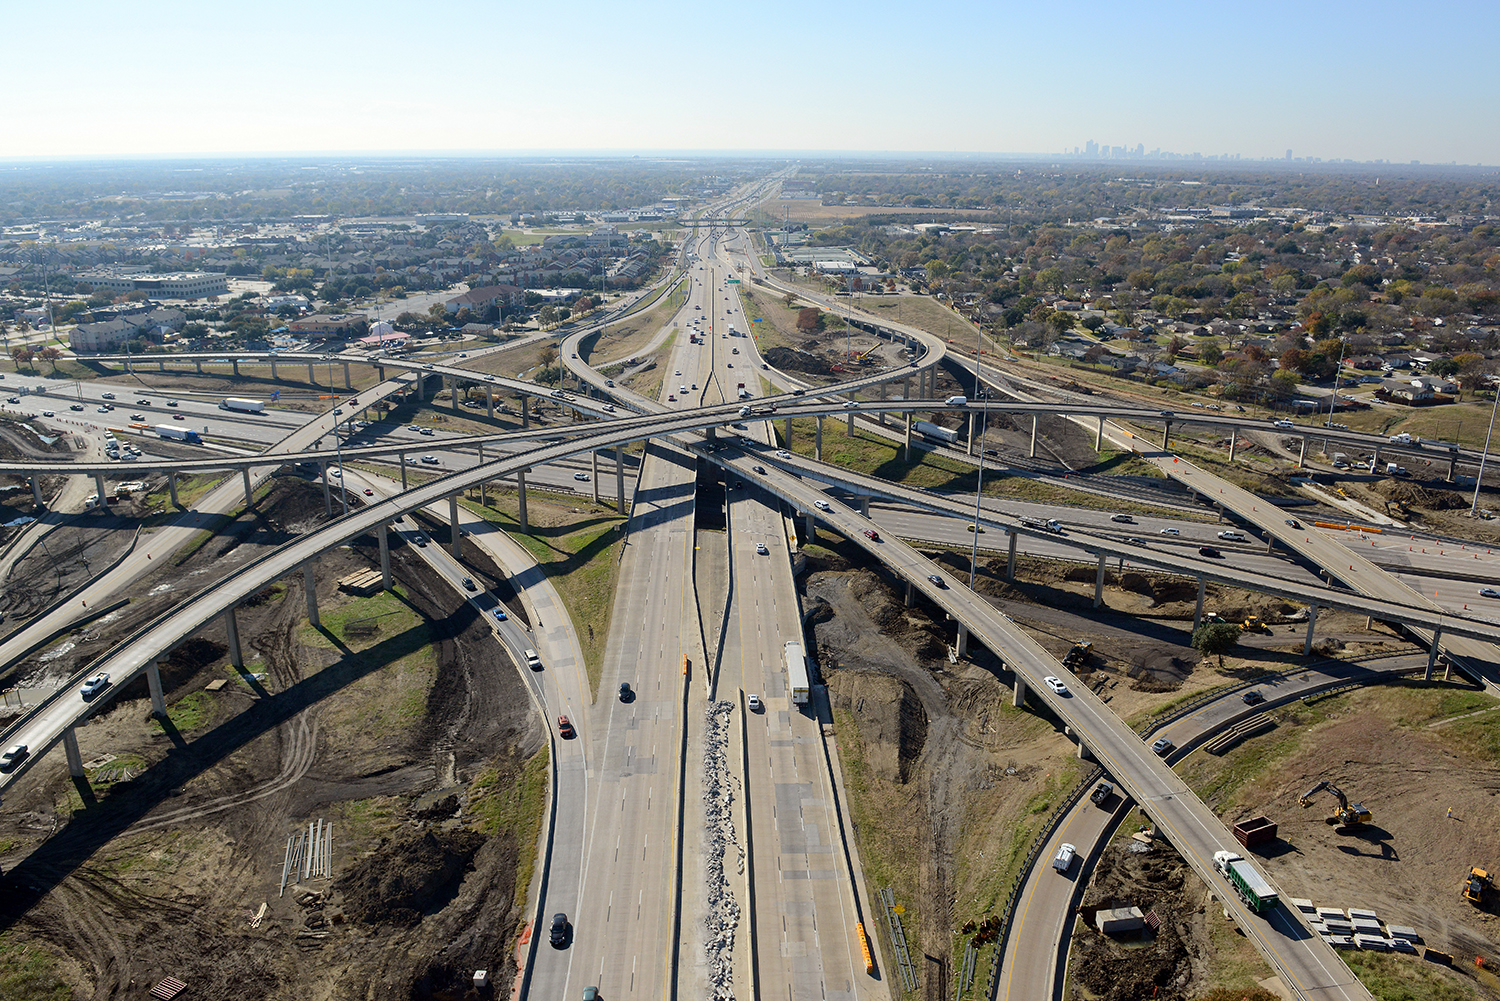 635E and I30 interchange westbound aerial view